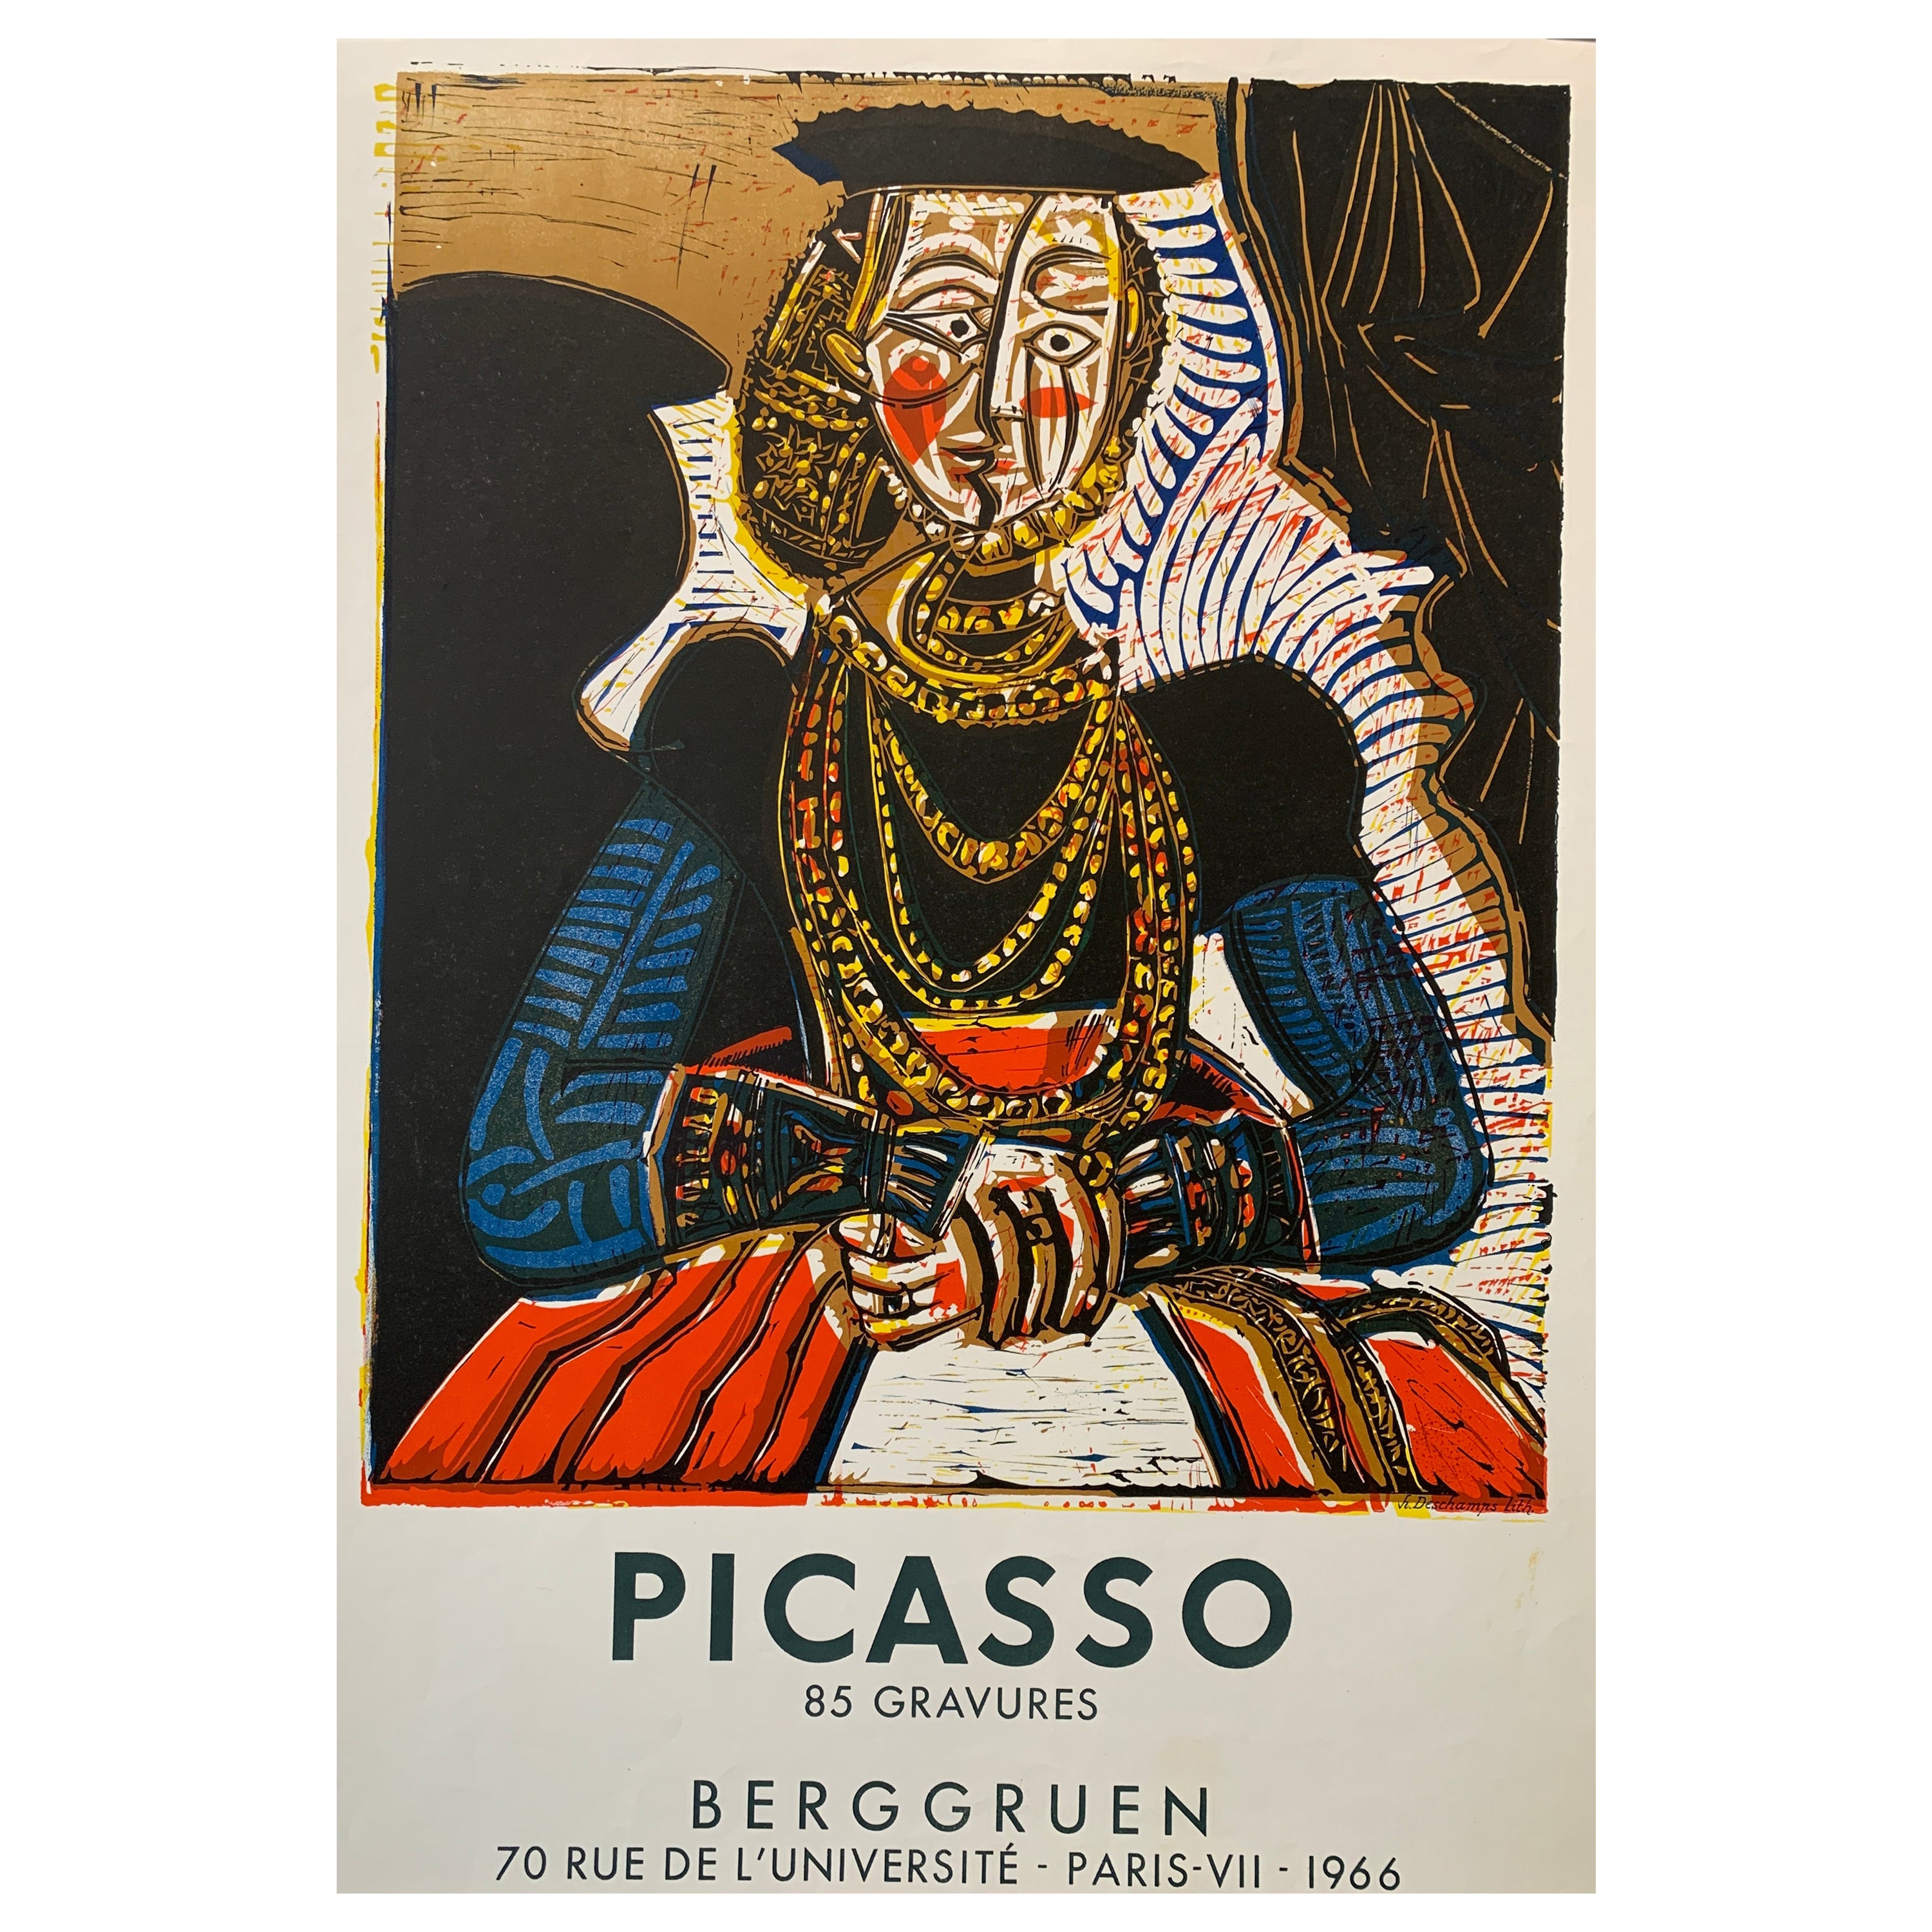 'PICASSO BERGGRUEN' Original Vintage Art & Exhibition Poster, 1966 